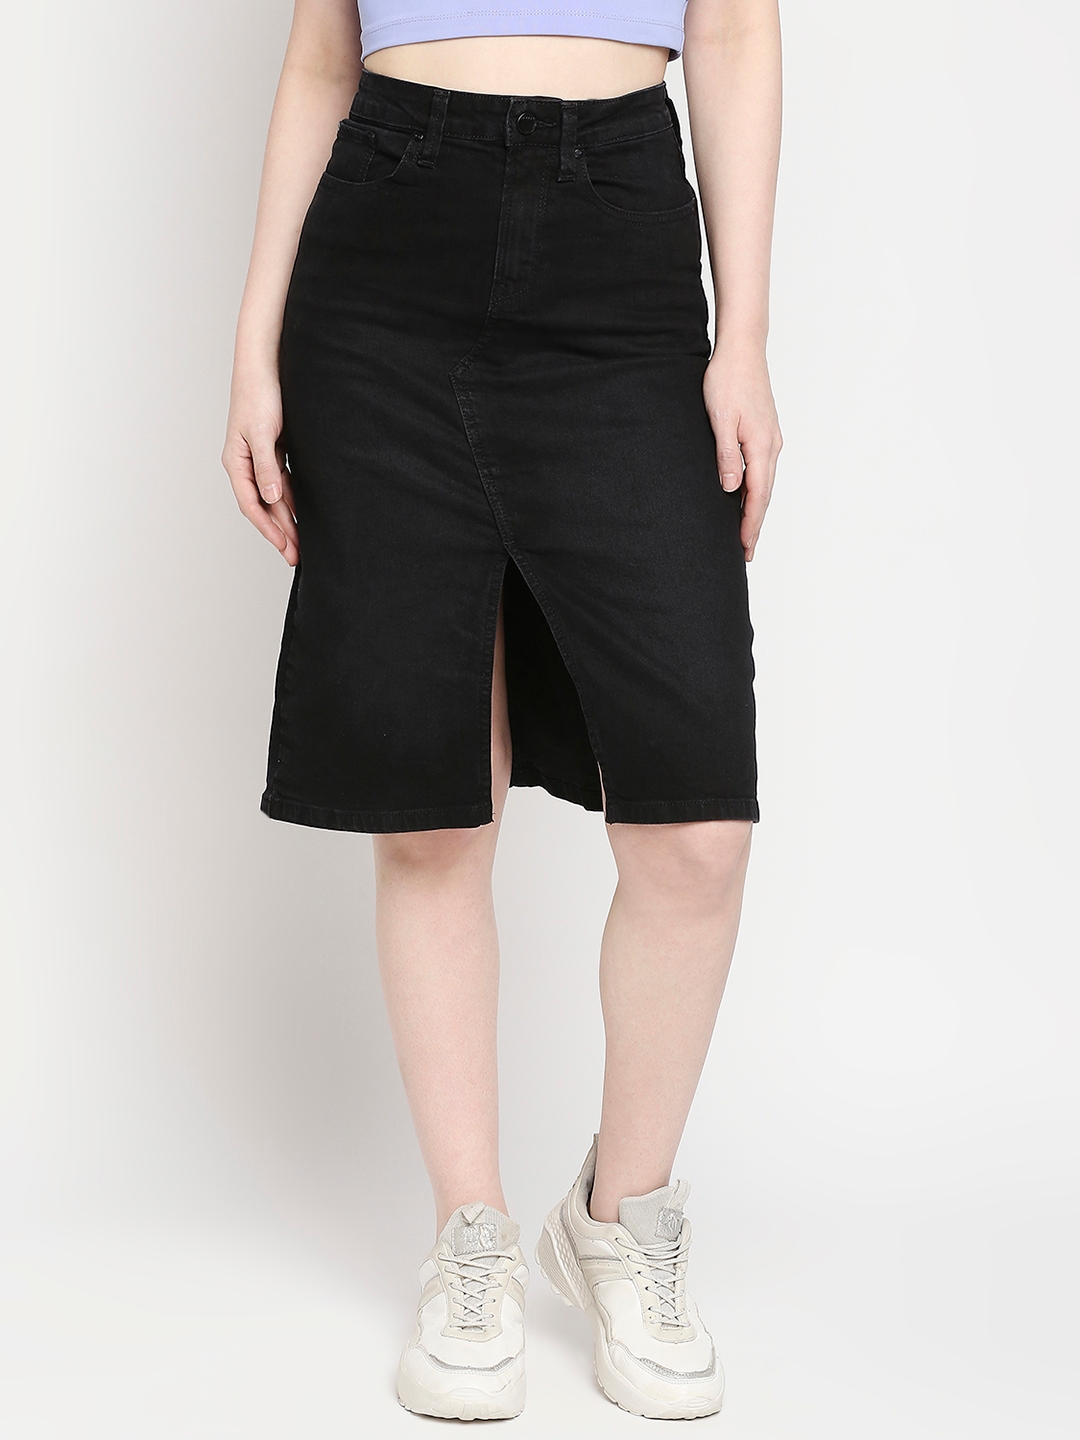 spykar | Women's Black Cotton Solid Jeans 0